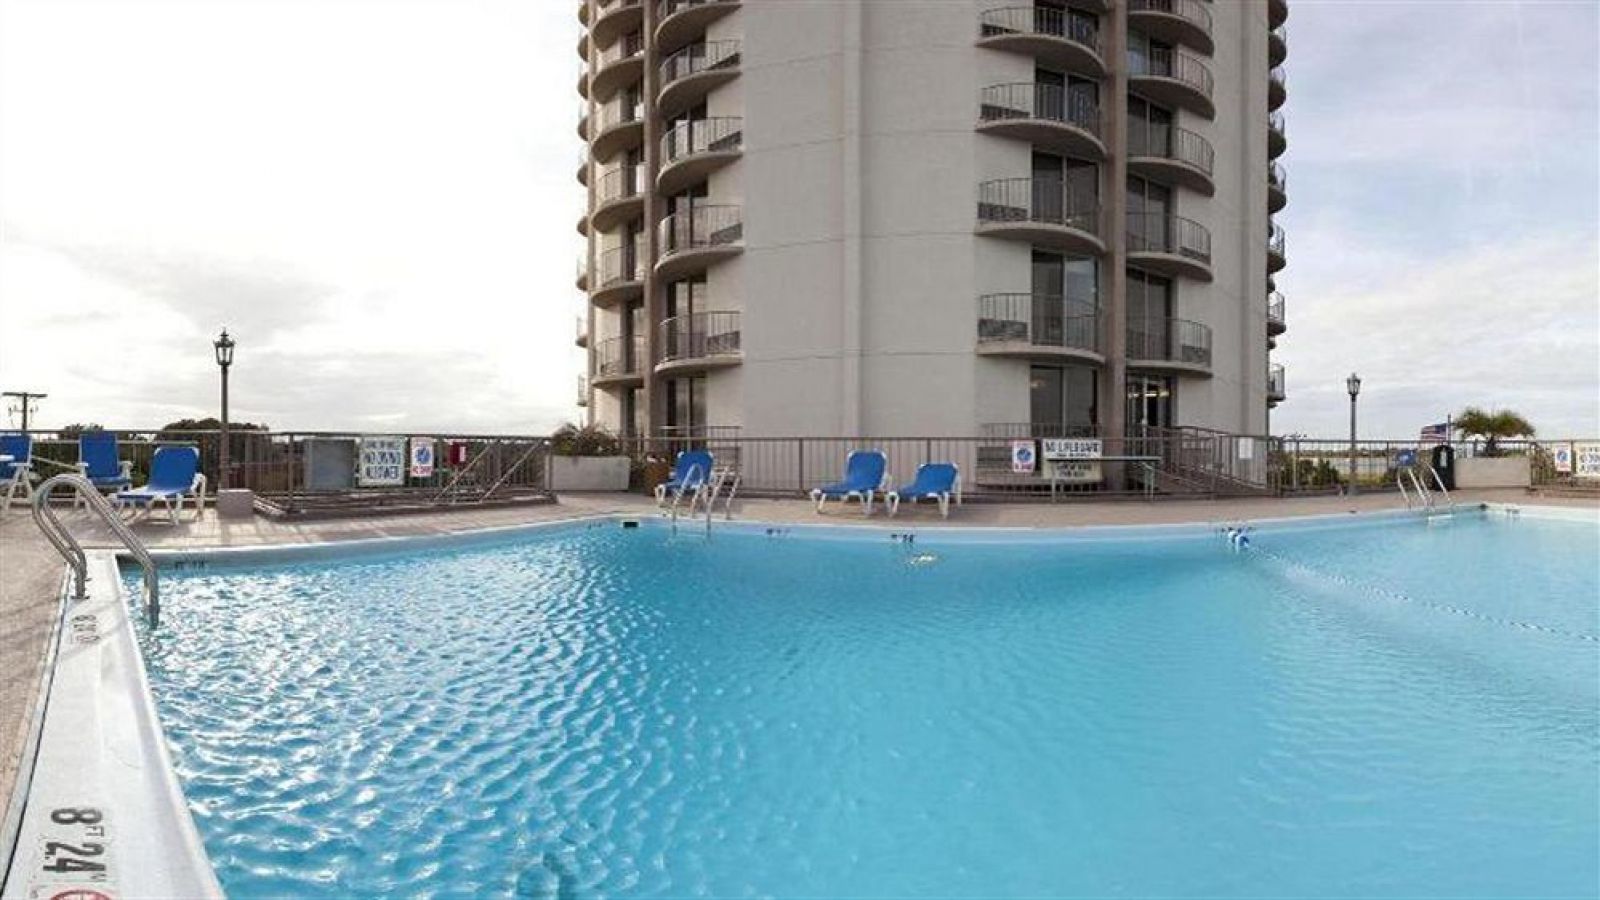 Holiday Inn Charleston Riverview - pool area